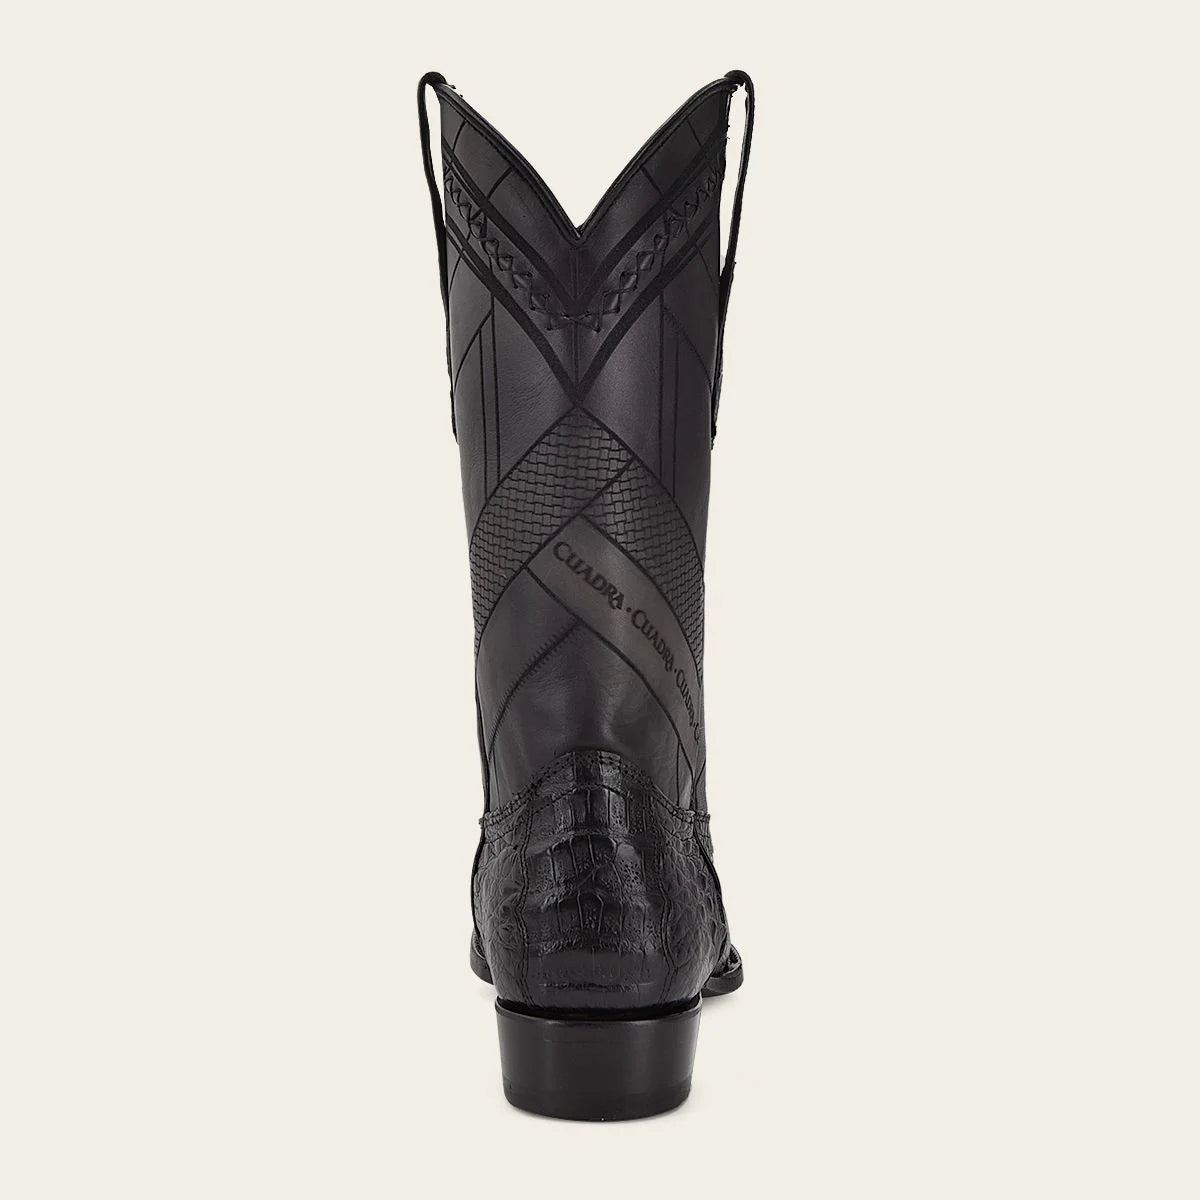 S42FFY - Cuadra black dress cowboy fuscus leather boots for men